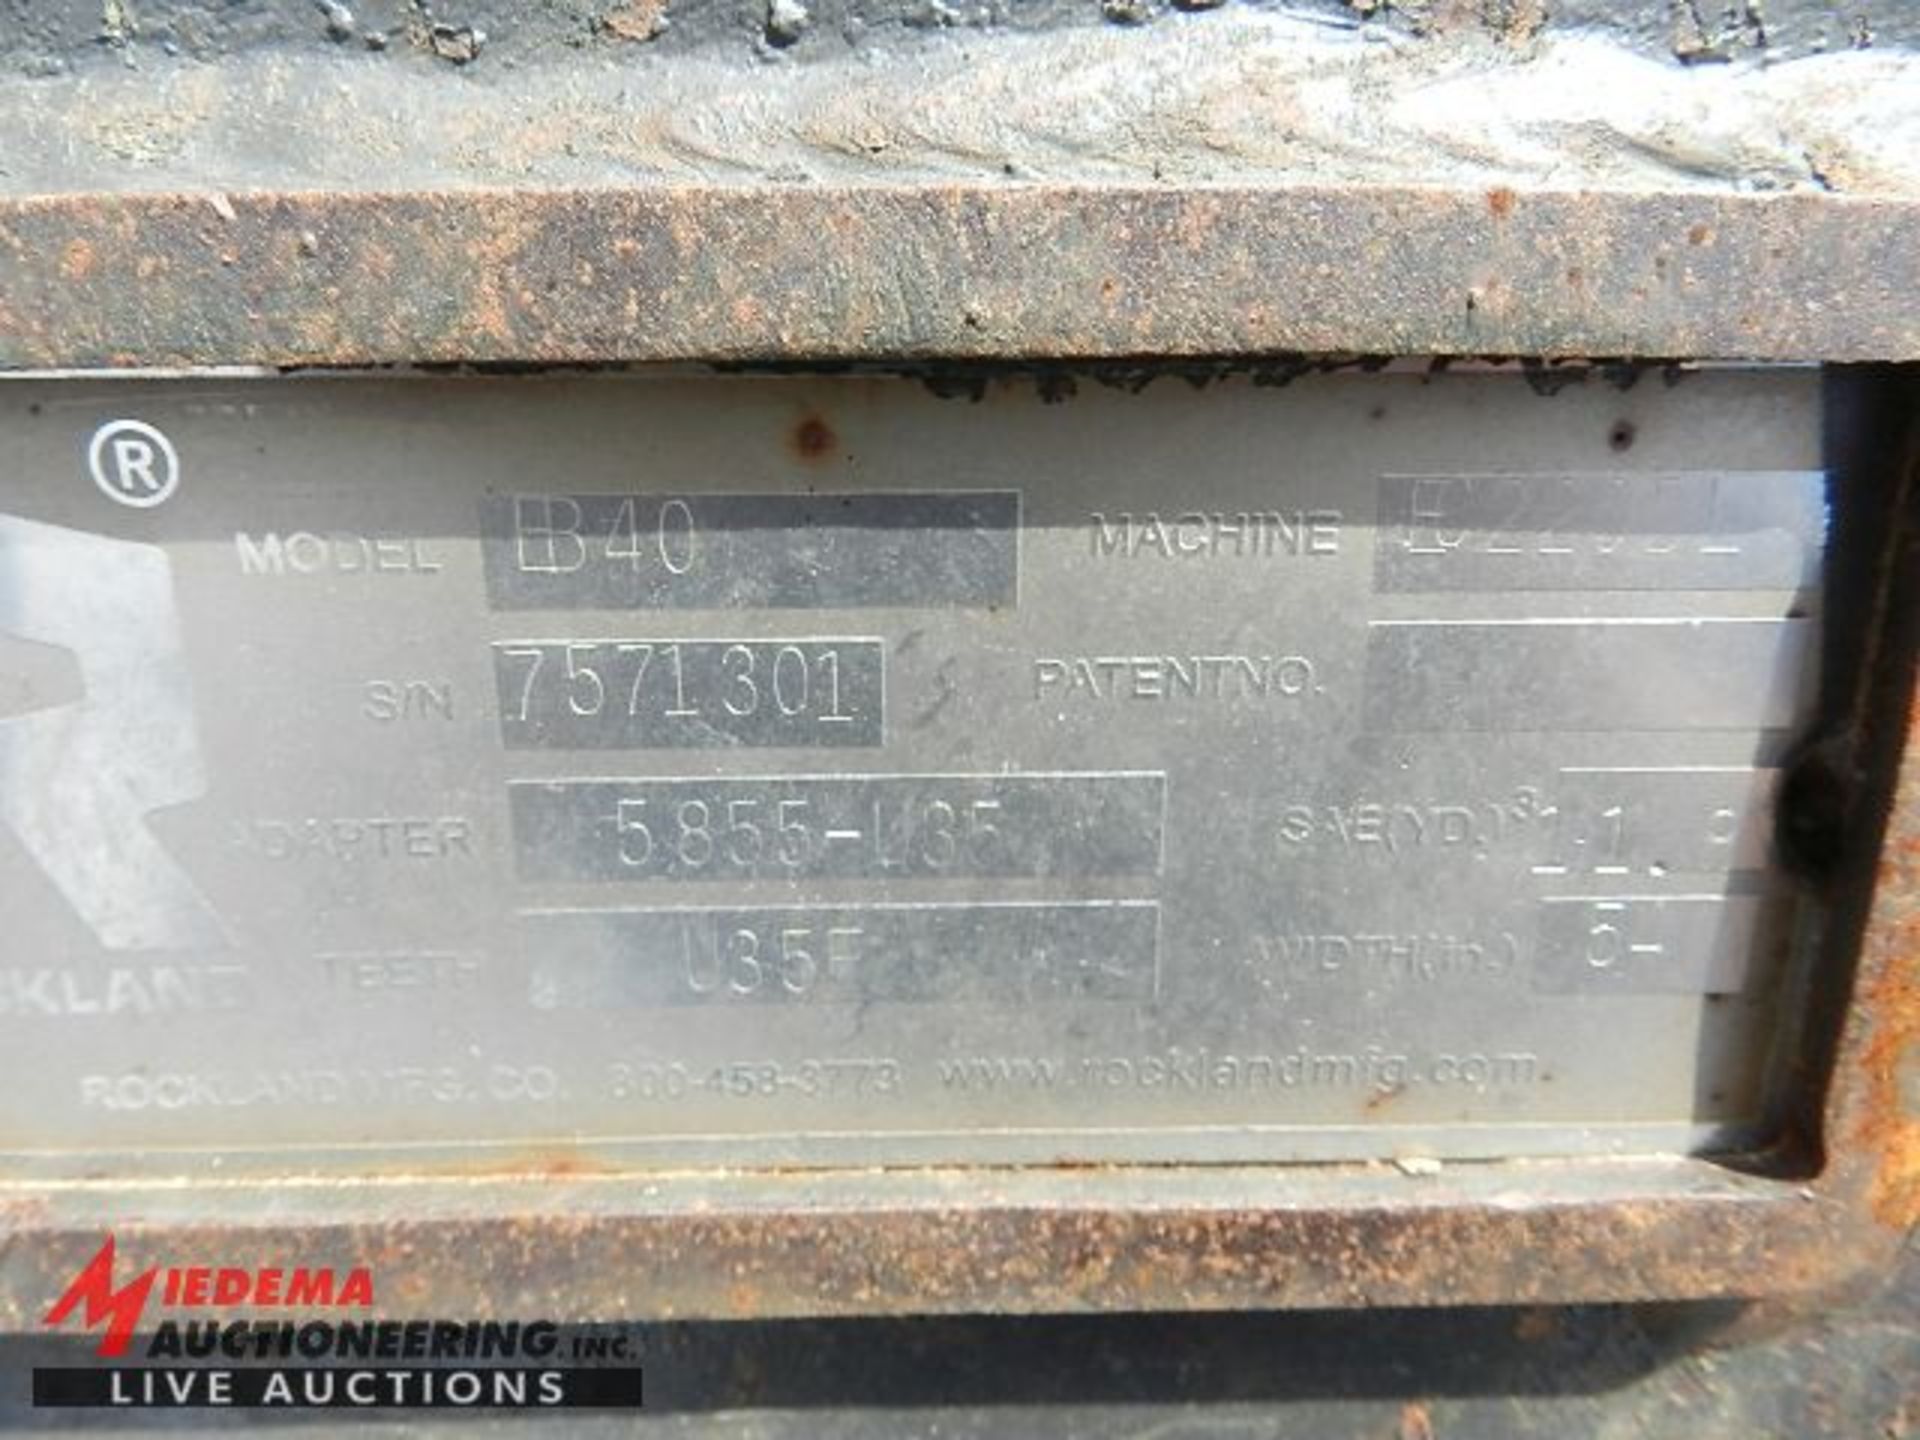 ROCKLAND EB40 EXCAVATOR BUCKET FOR EC220 DL, SERIAL #7571301 (UNIT #168603) - Image 4 of 4